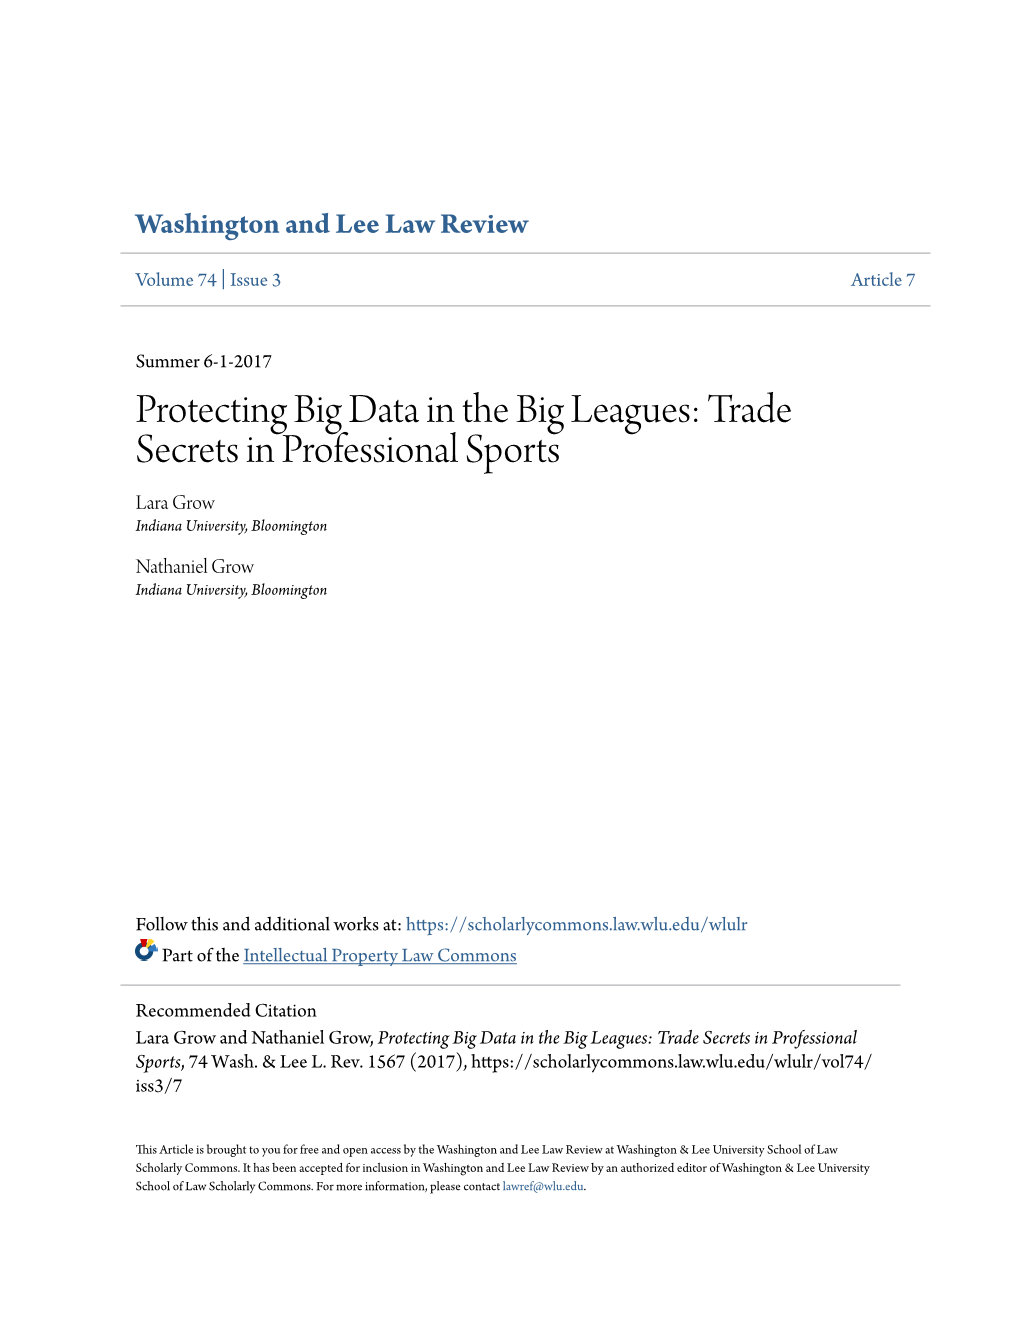 Trade Secrets in Professional Sports Lara Grow Indiana University, Bloomington